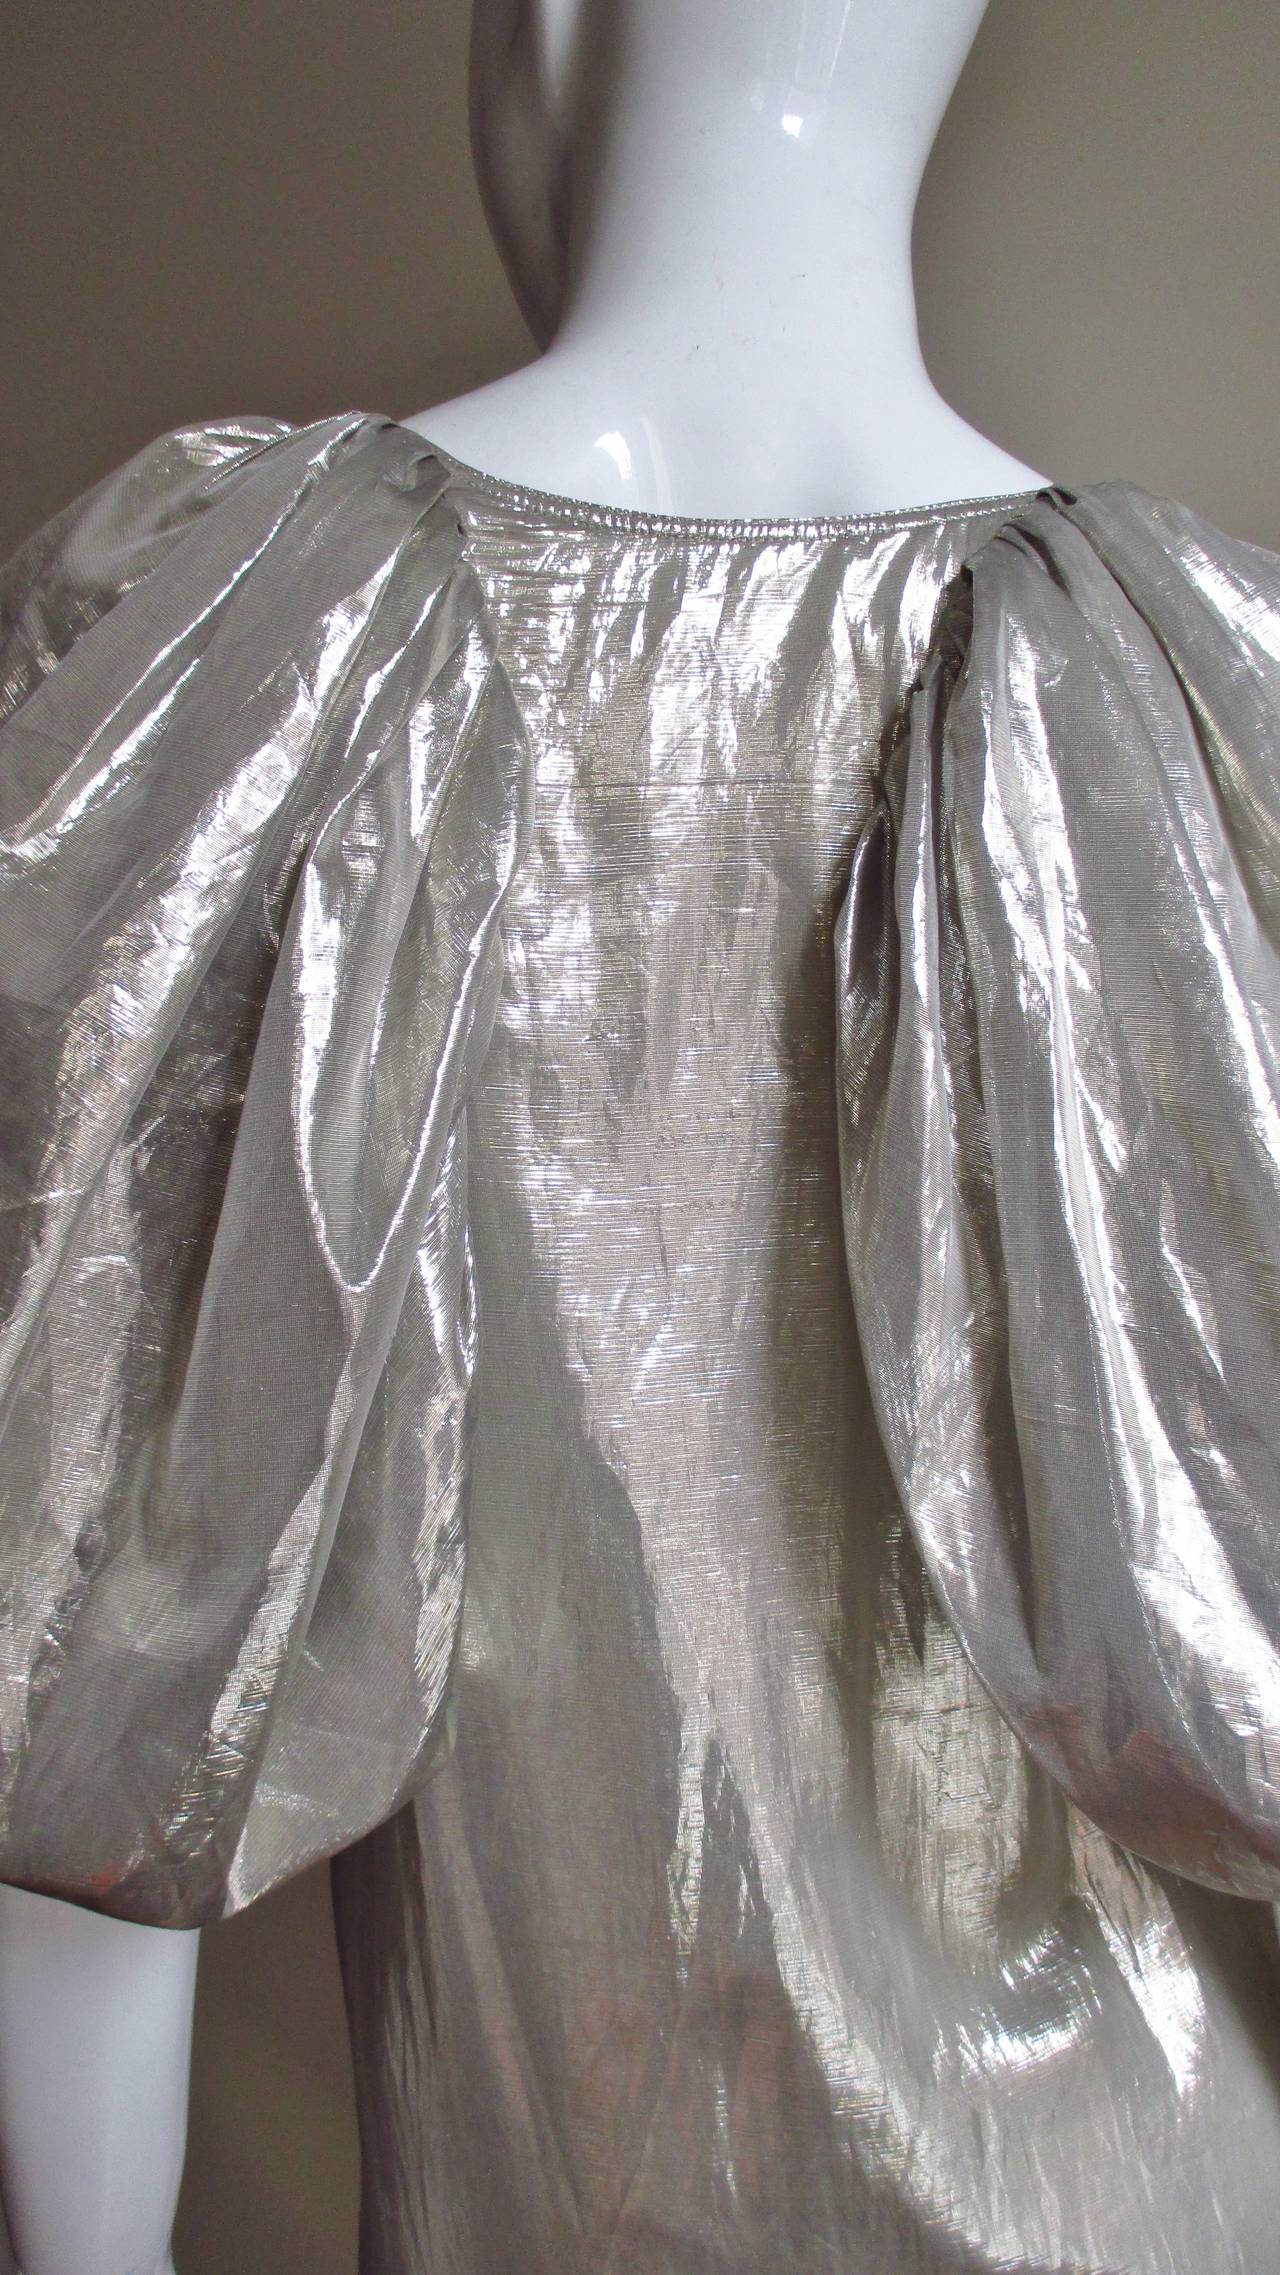 Stella McCartney Silver Silk Dress For Sale at 1stdibs